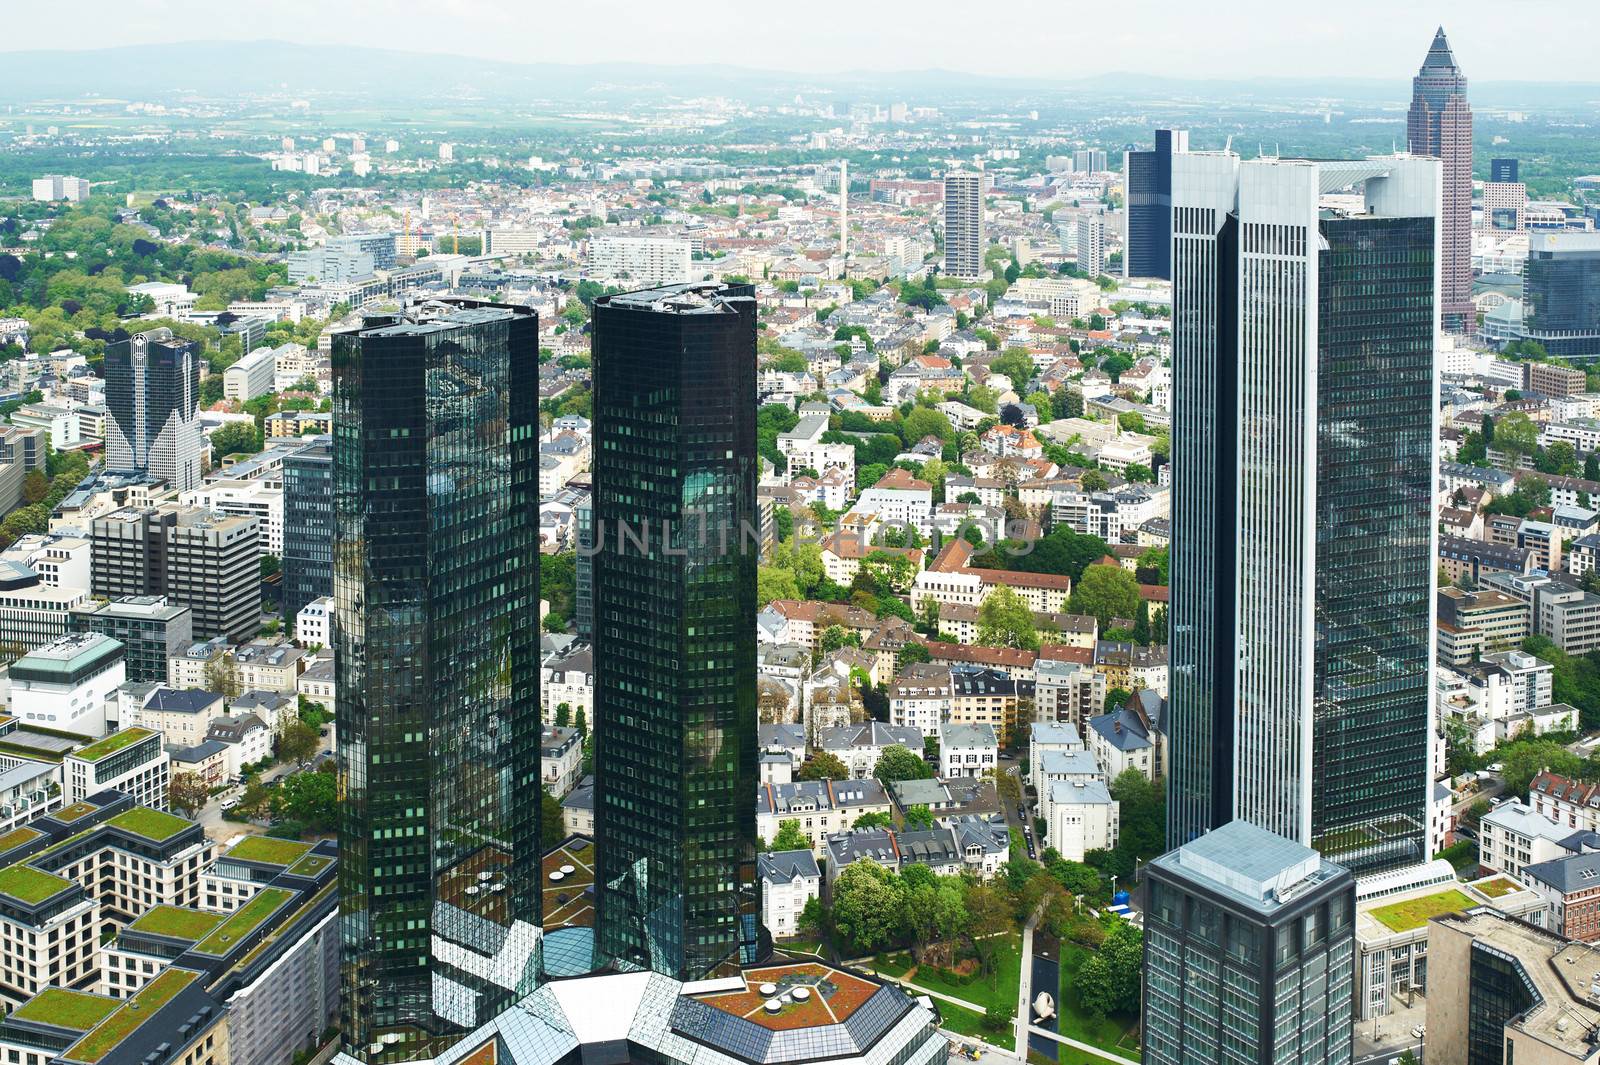 Frankfurt on Main, Germany by haveseen